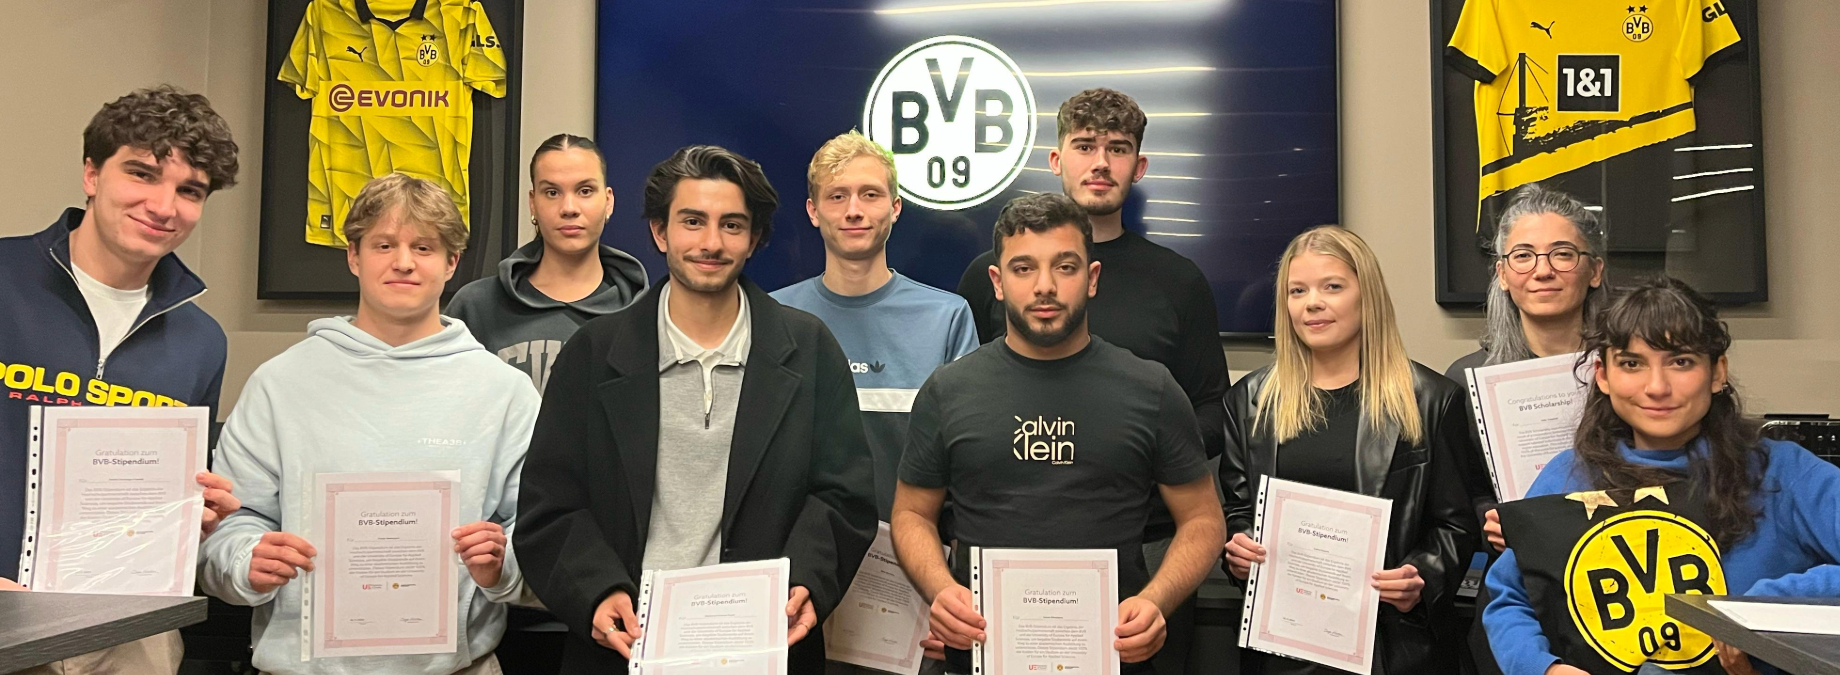 BVB scholarship